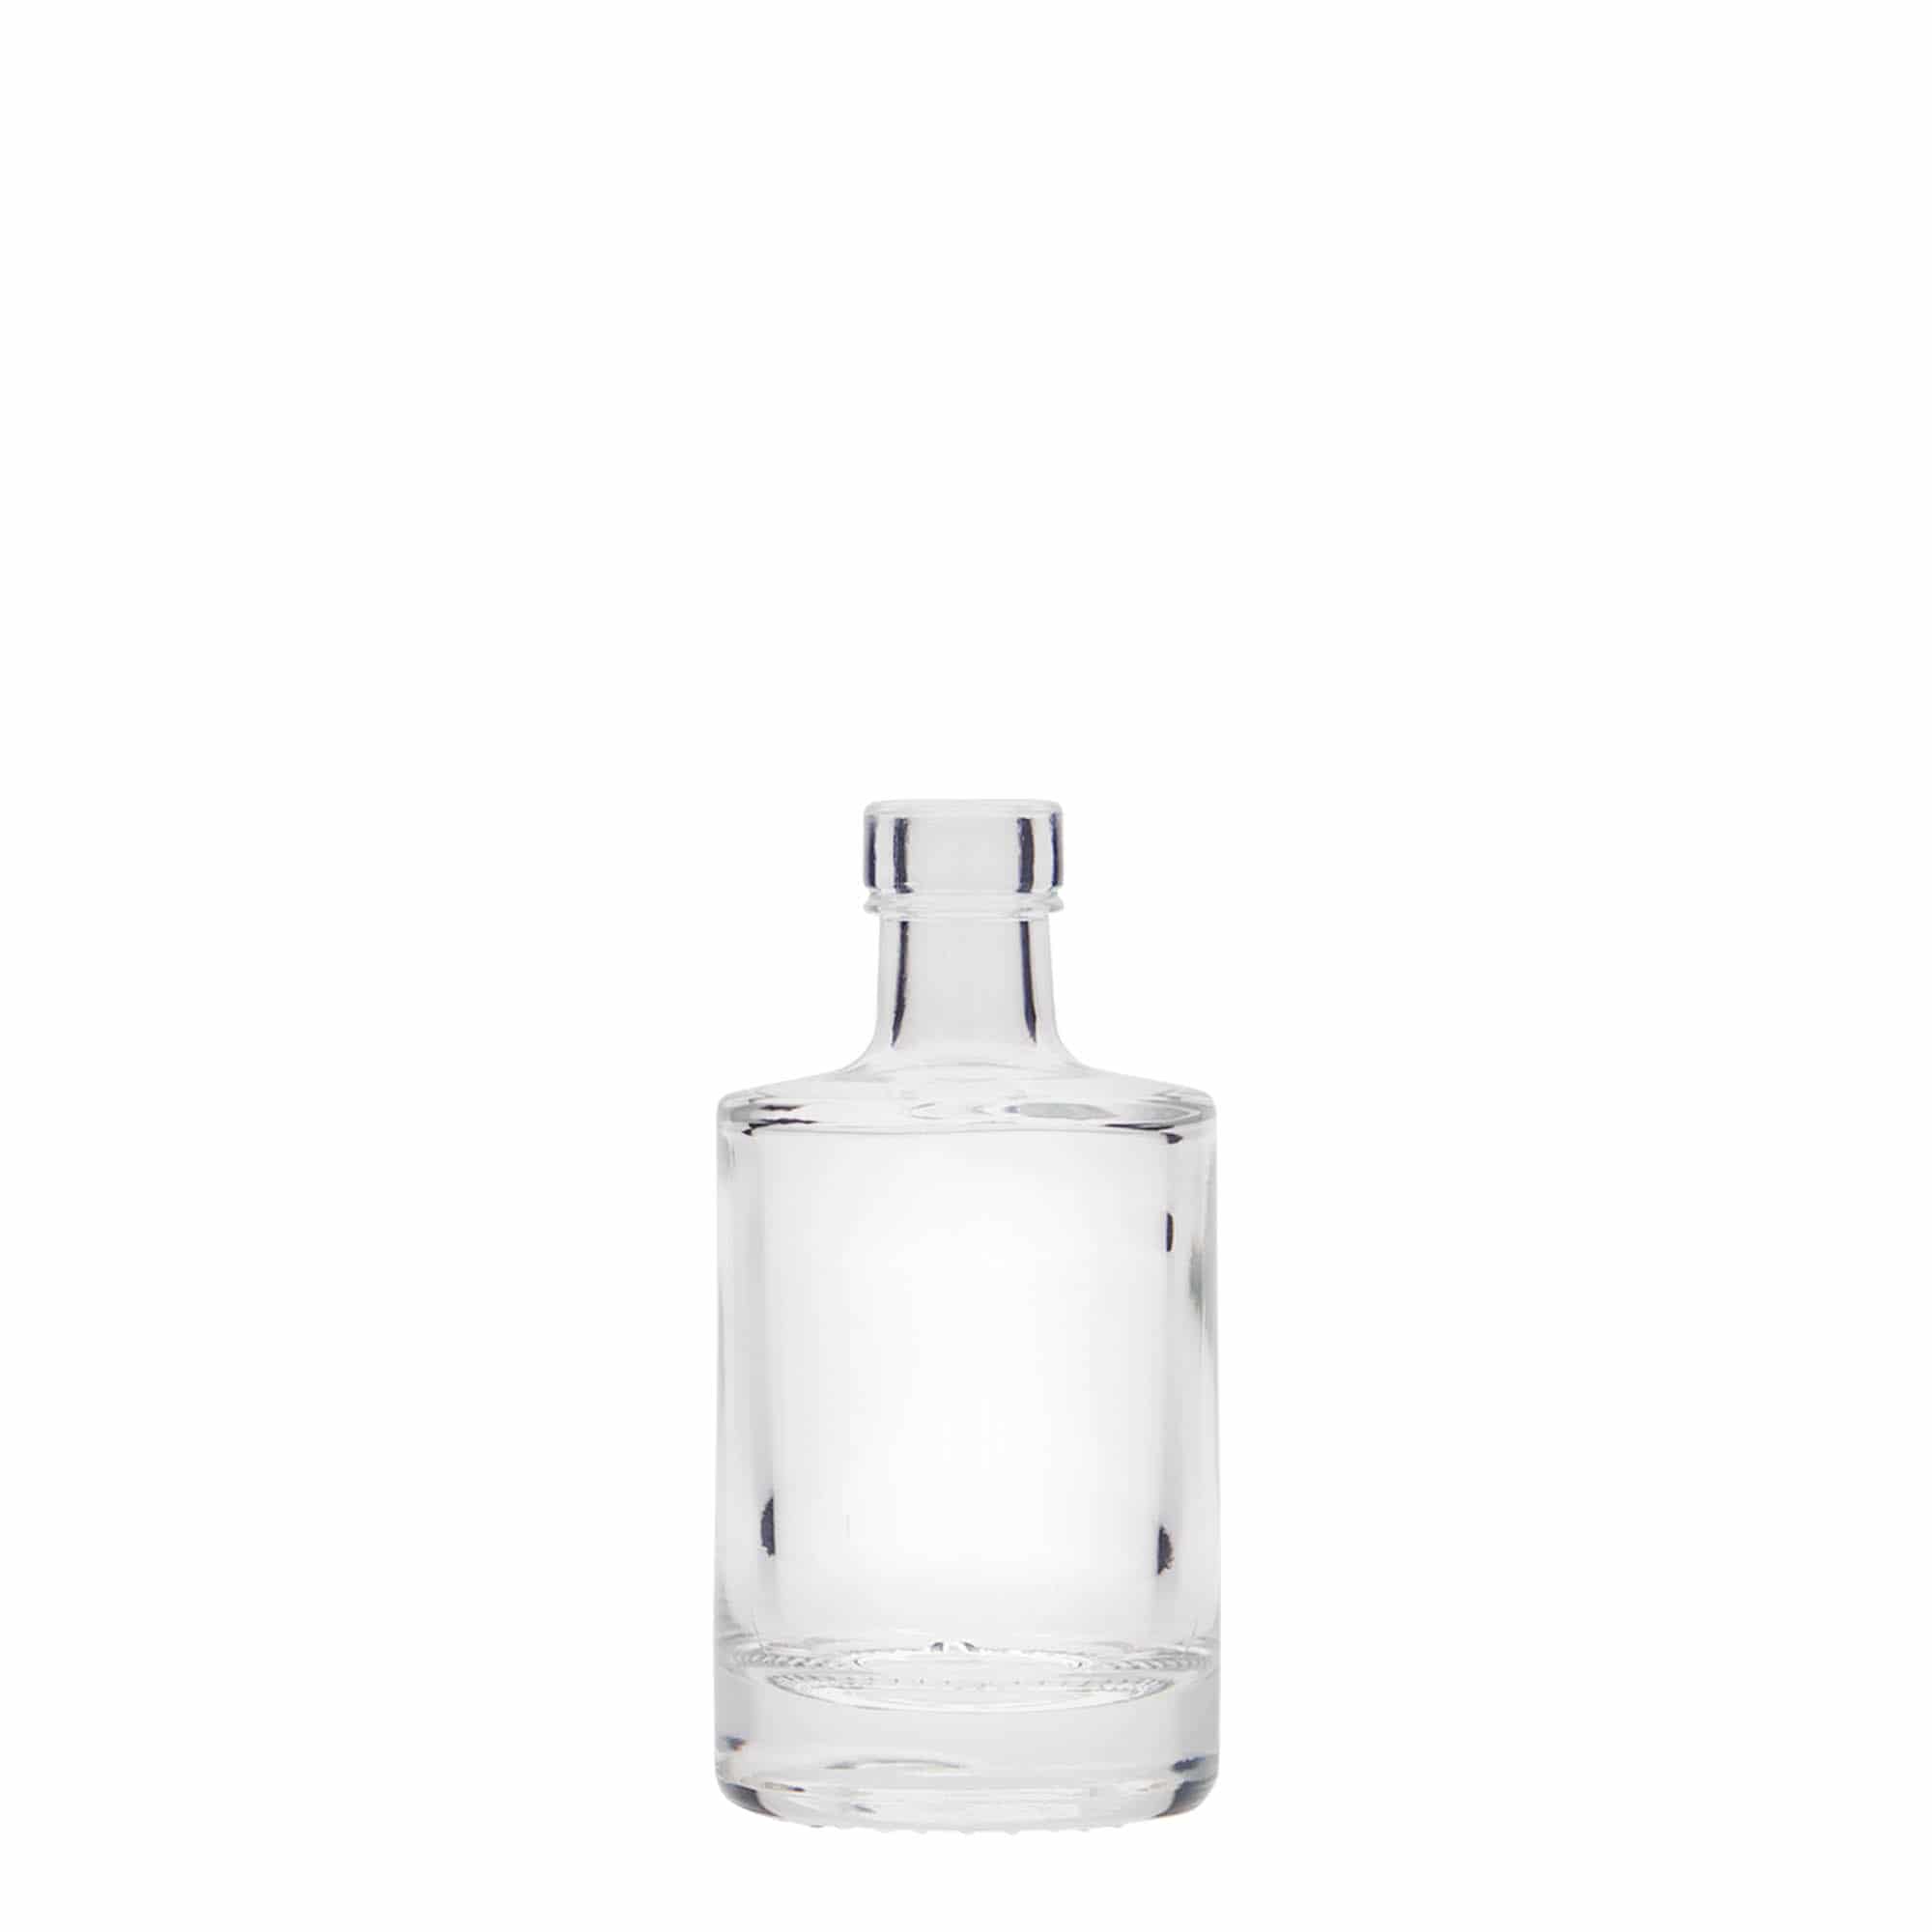 50 ml glass bottle 'Aventura', closure: cork